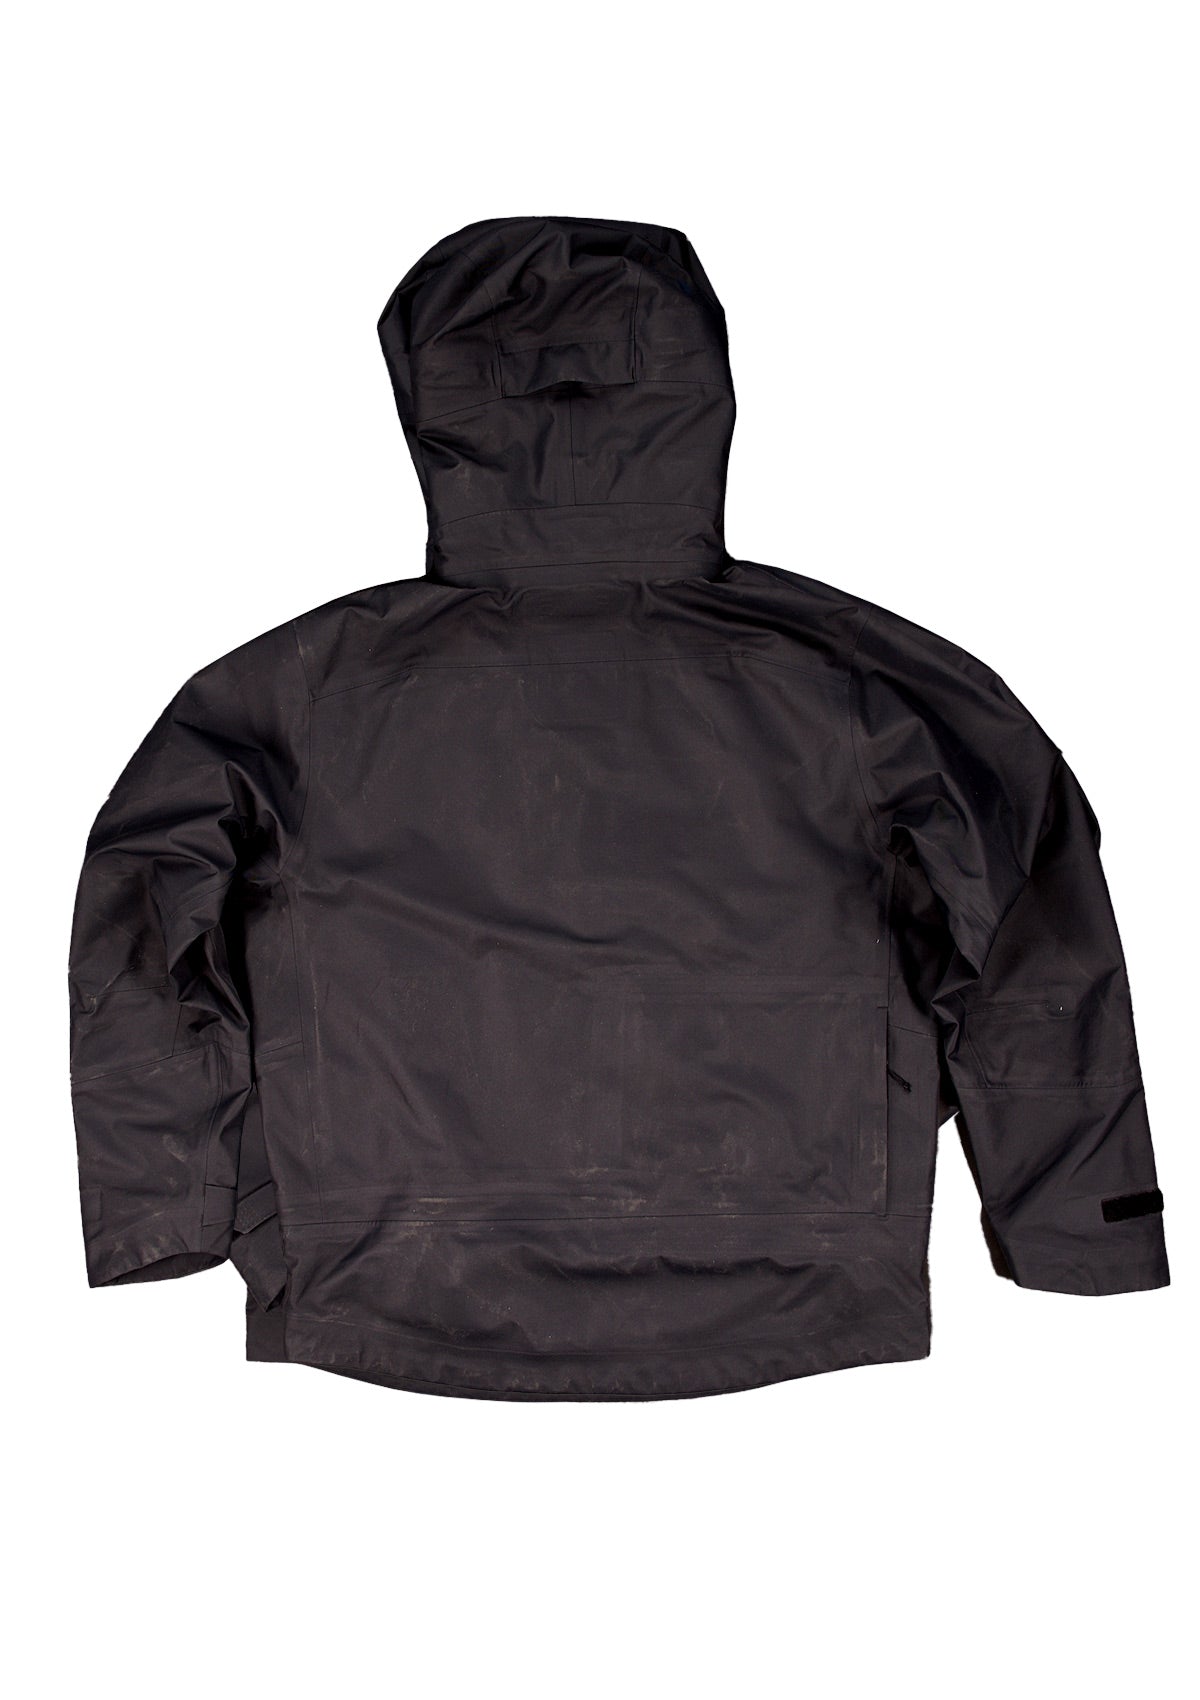 needessentials hard shell jacket black adventure snow jacket non branded 